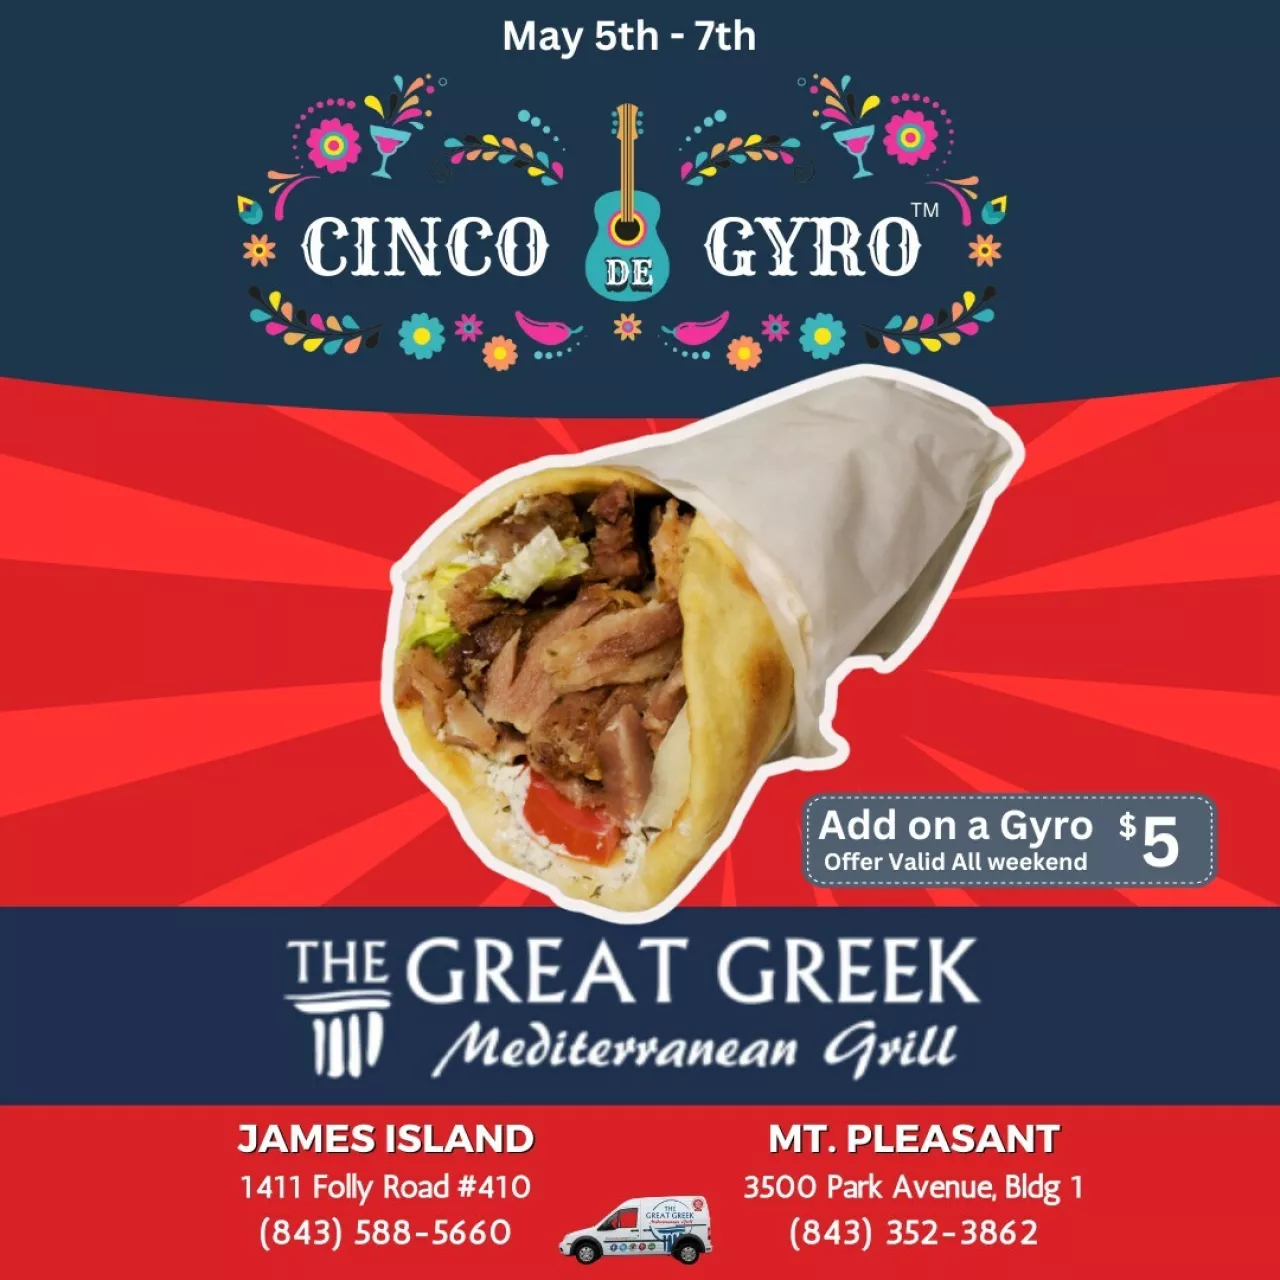 Come Celebrate Cinco de Gyro™ at The Great Greek Grill